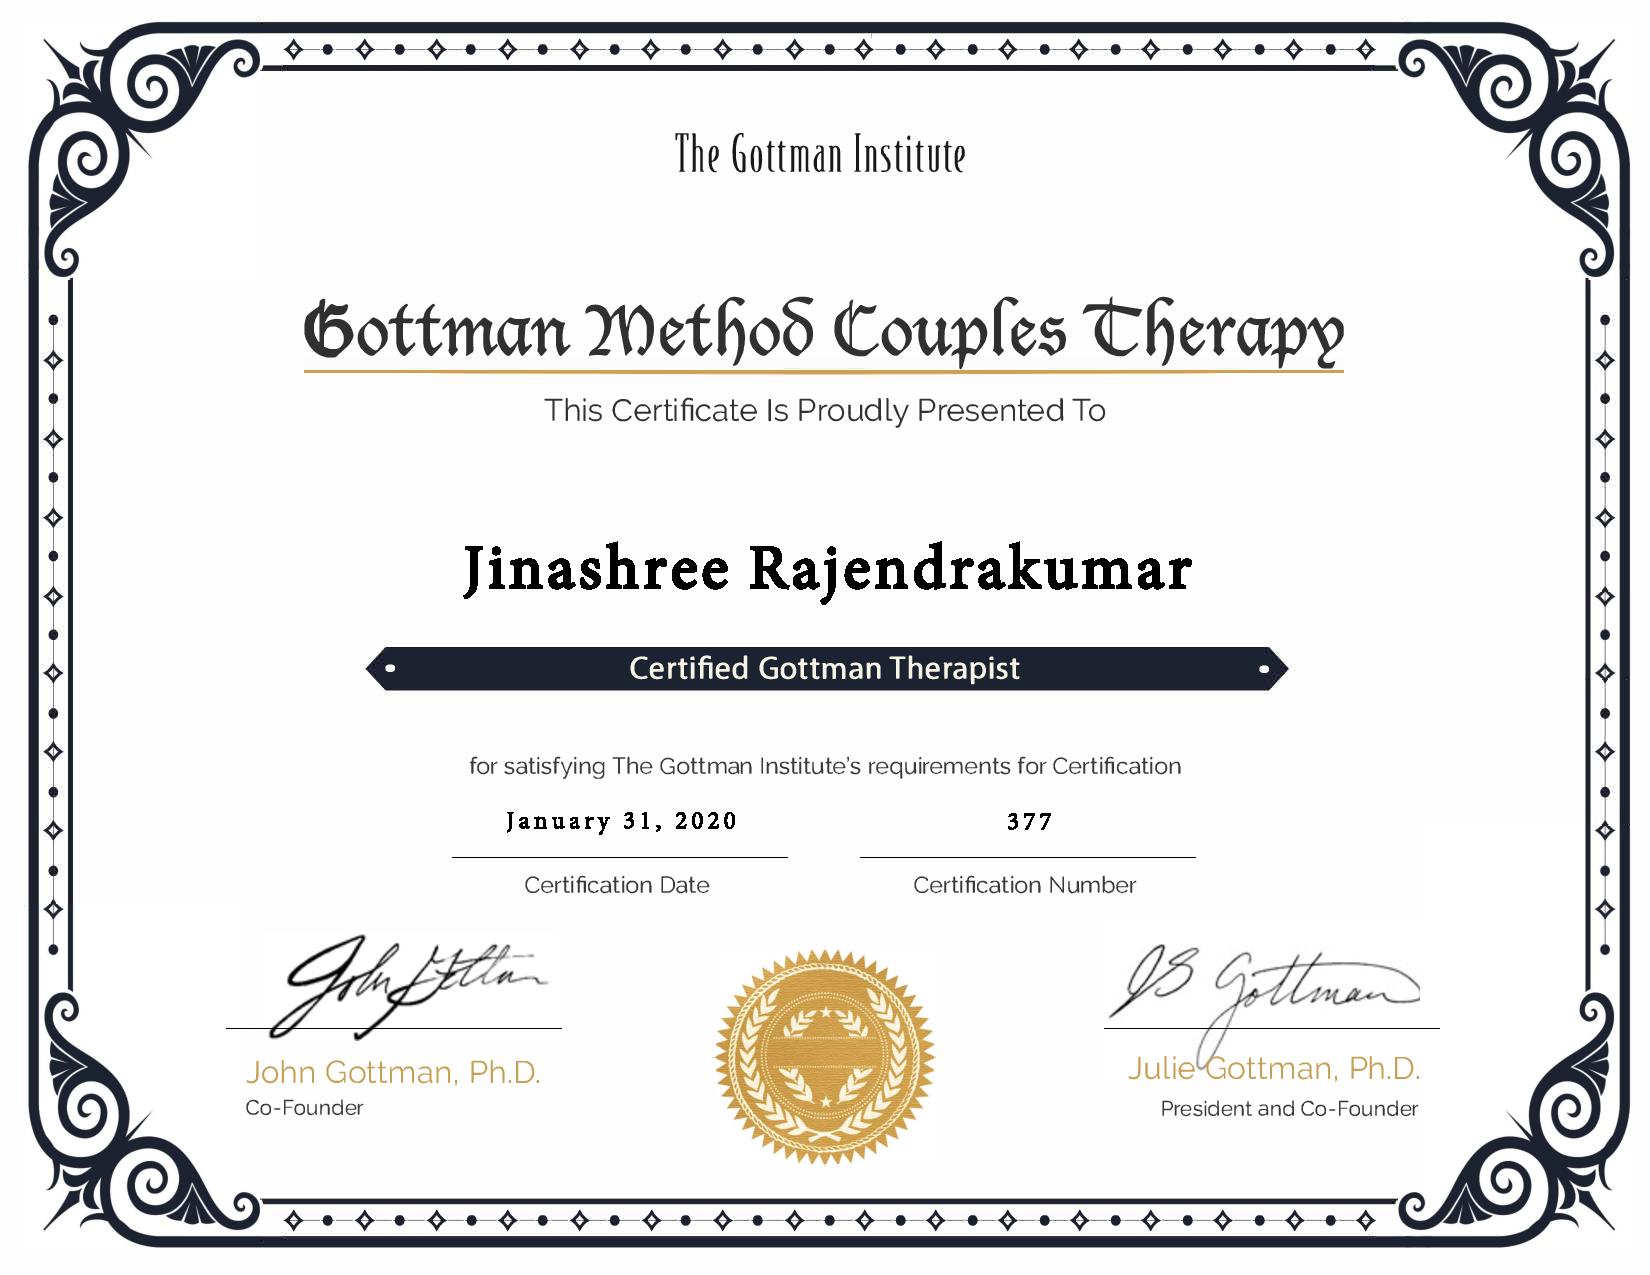 CGT Certificate - Jinashree Rajendrakumar-page-001